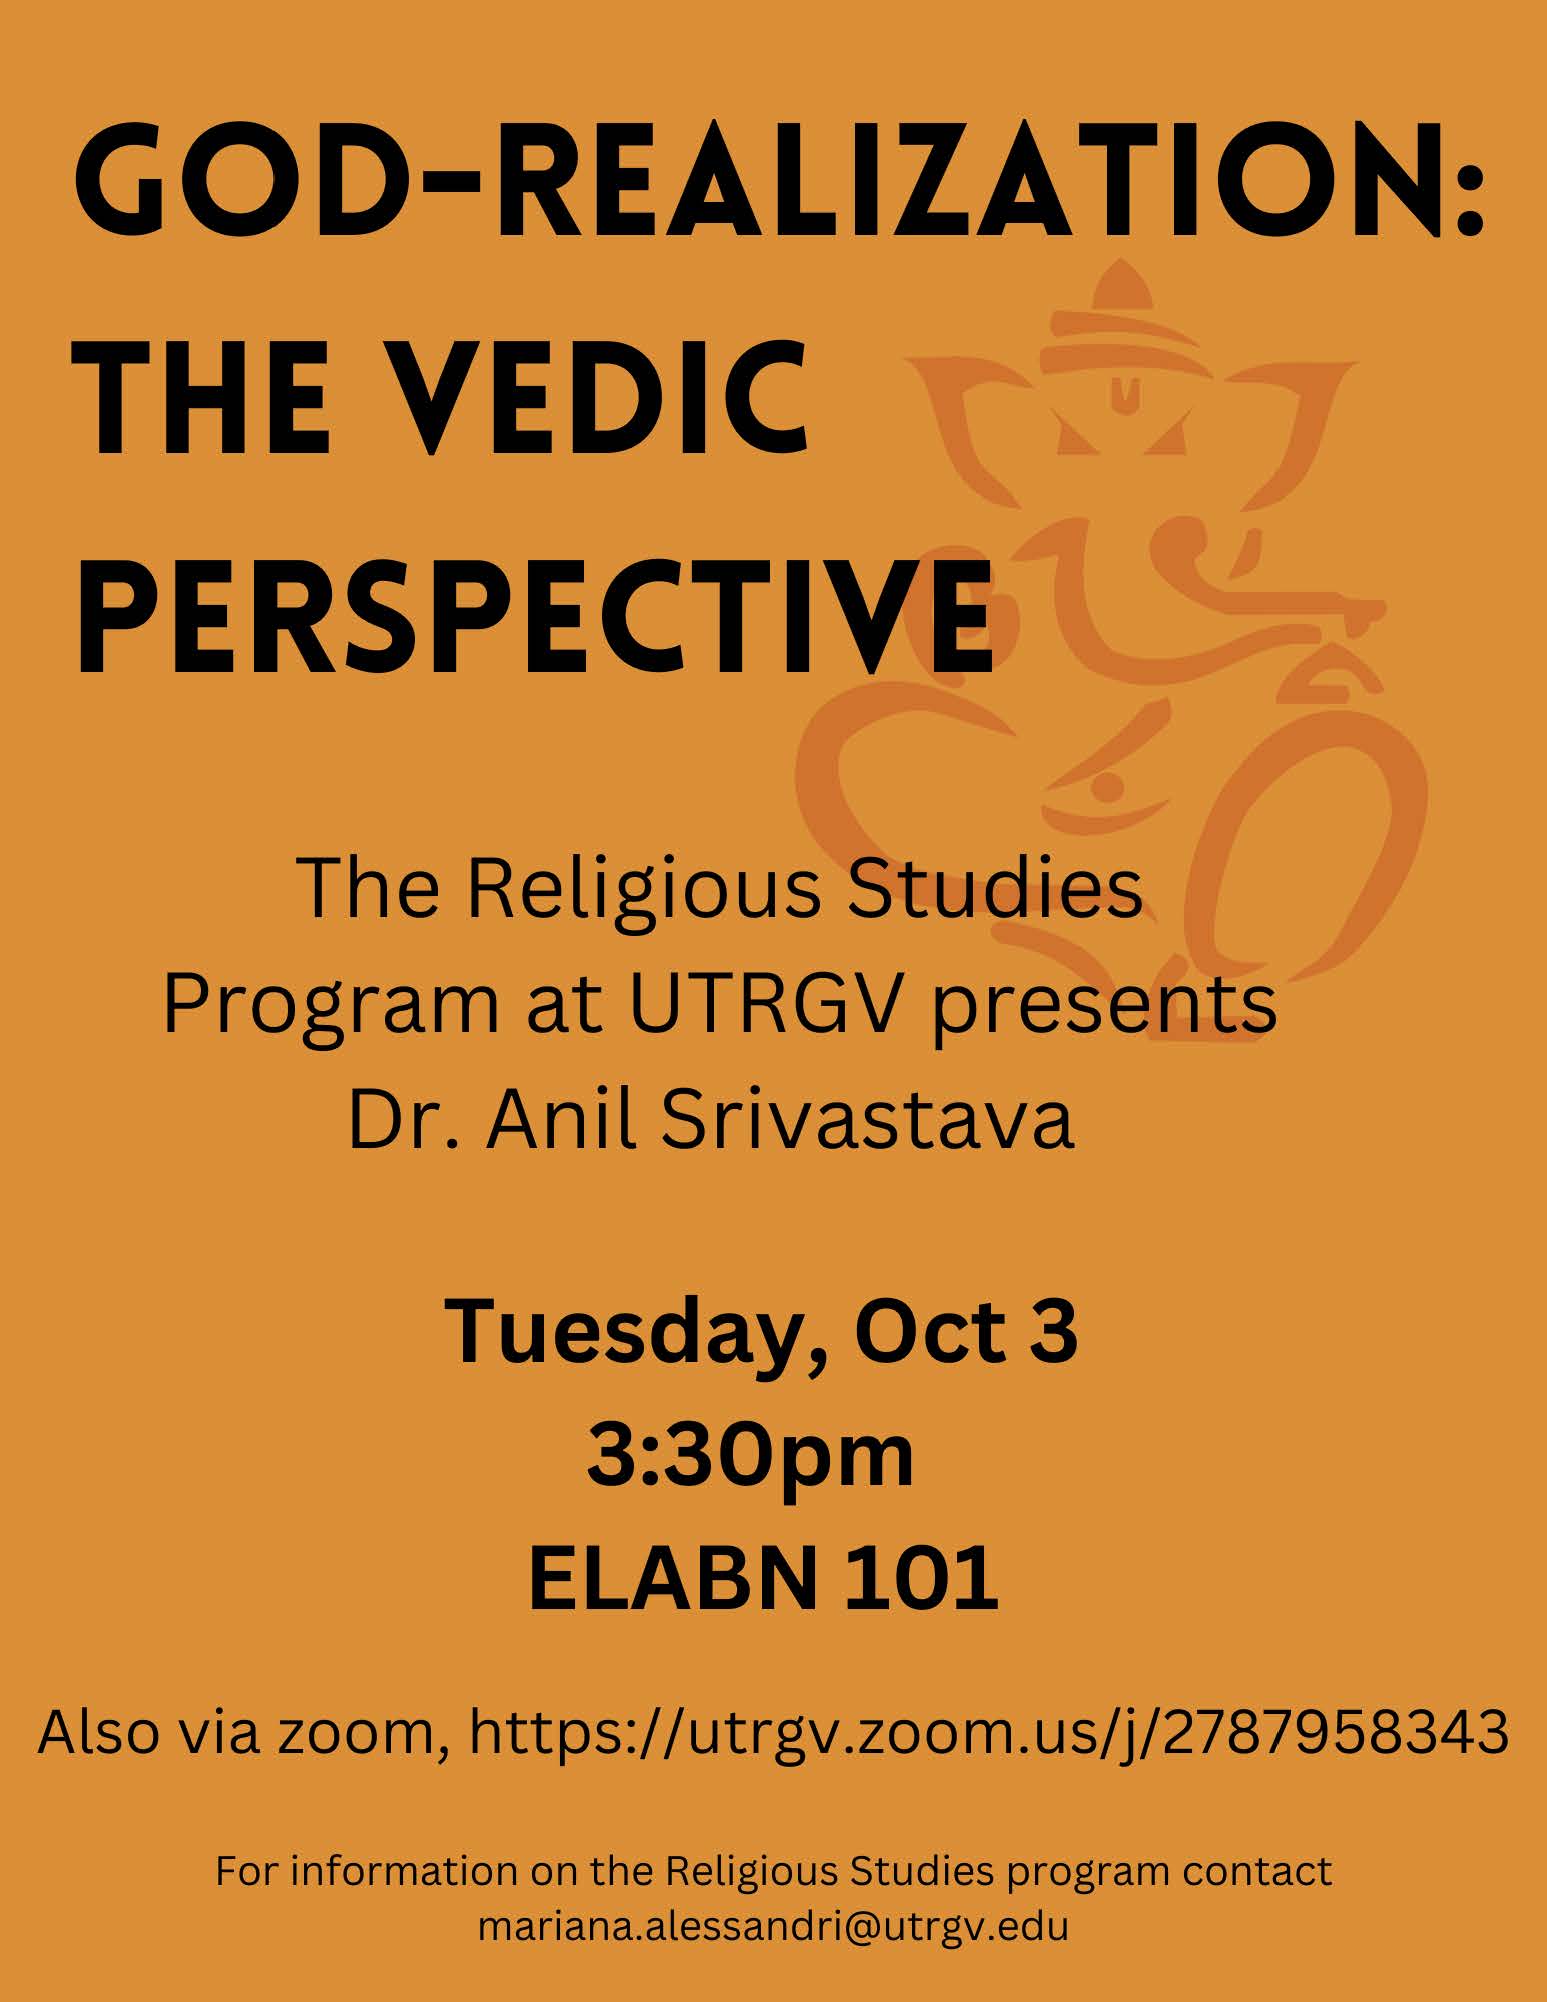 The UTRGV Religious Studies Program presents a free talk by Dr. Anil Sravastava!